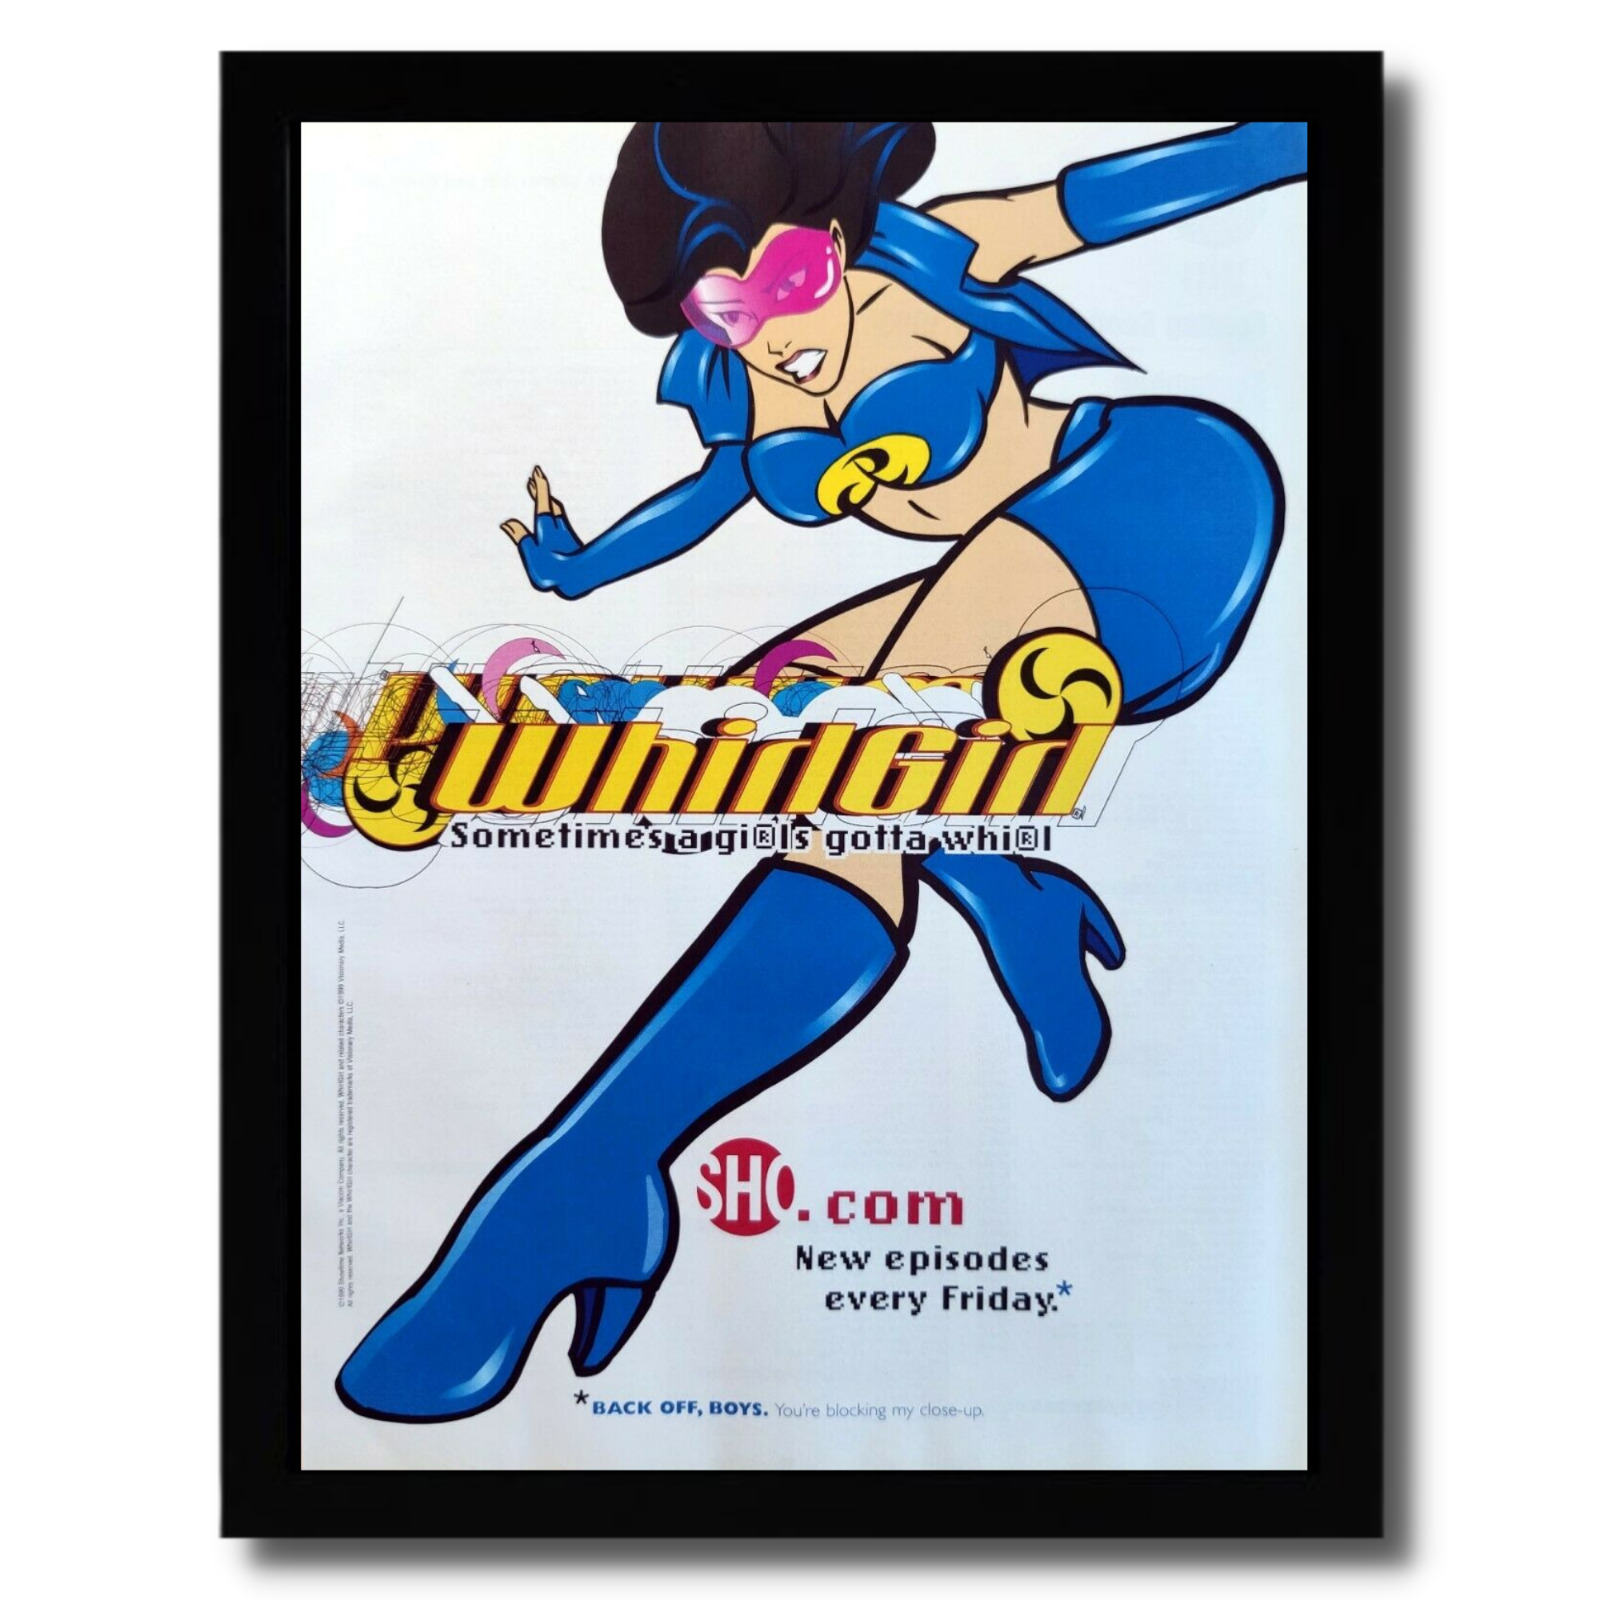 1999 WHIRLGIRL Framed Print Ad/Poster Authentic Original Wall Art Whirl Girl